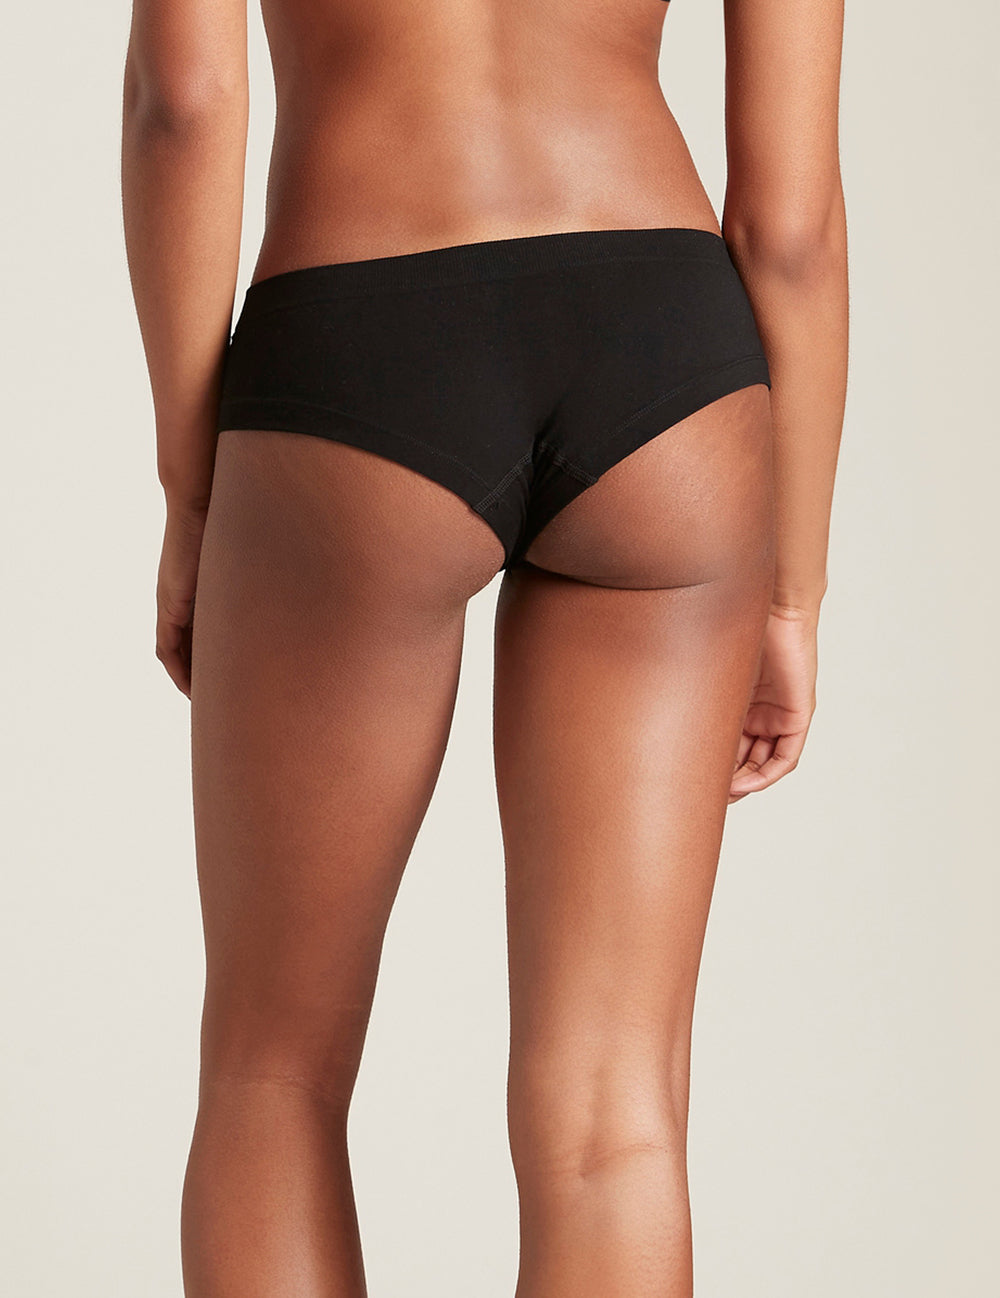 Boody Brazilian Bikini Underwear